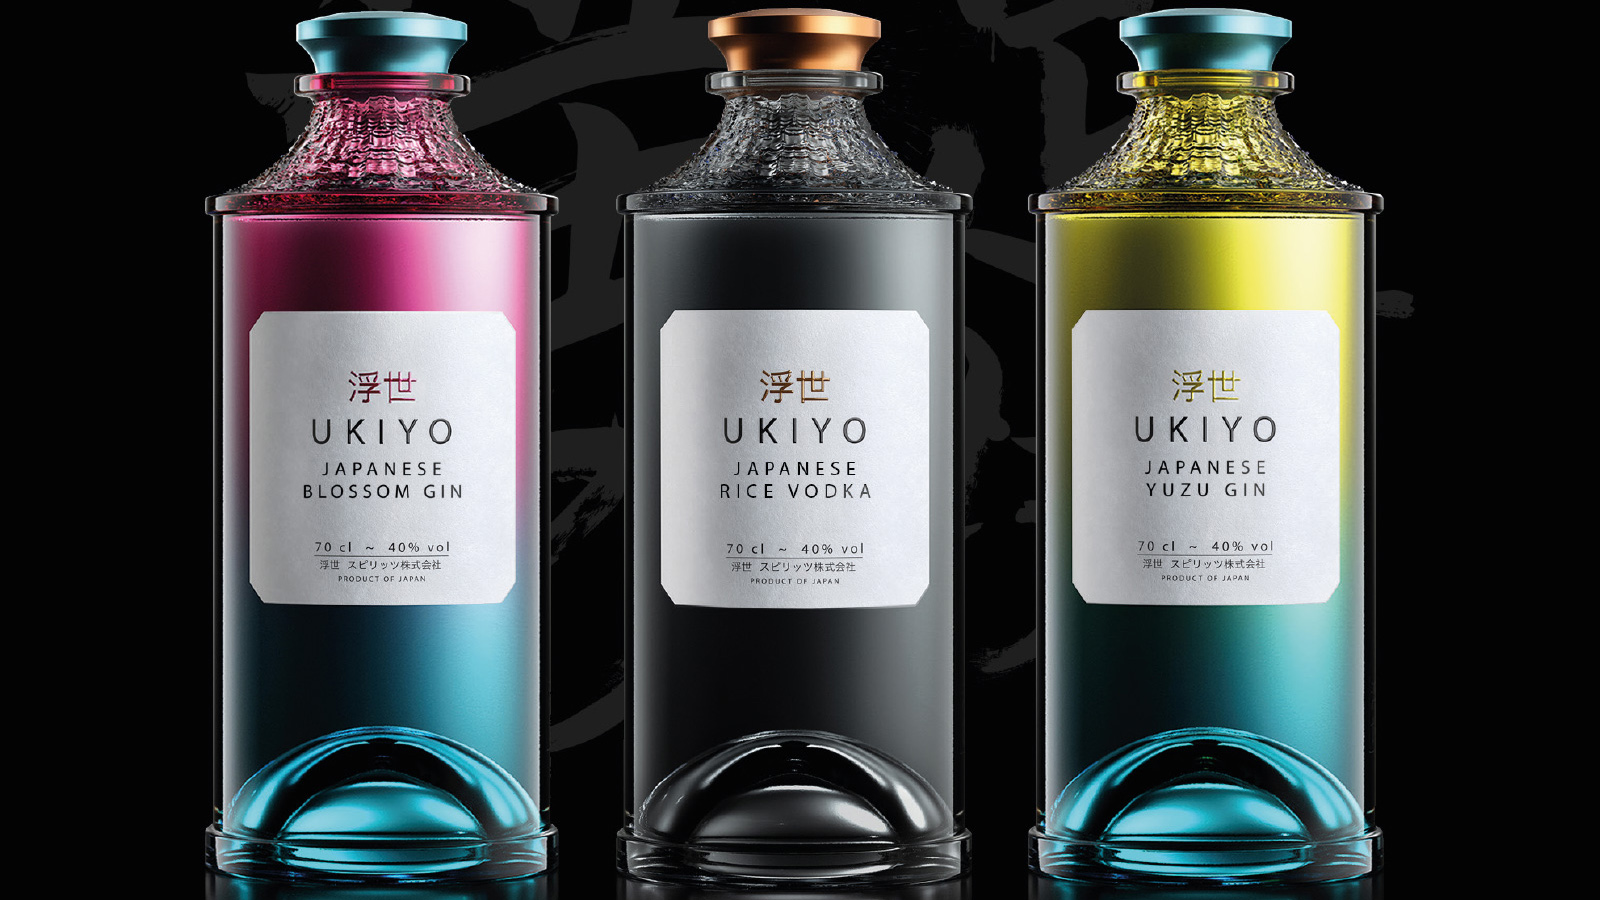 Ukiyo Japanese Gin and Vodka